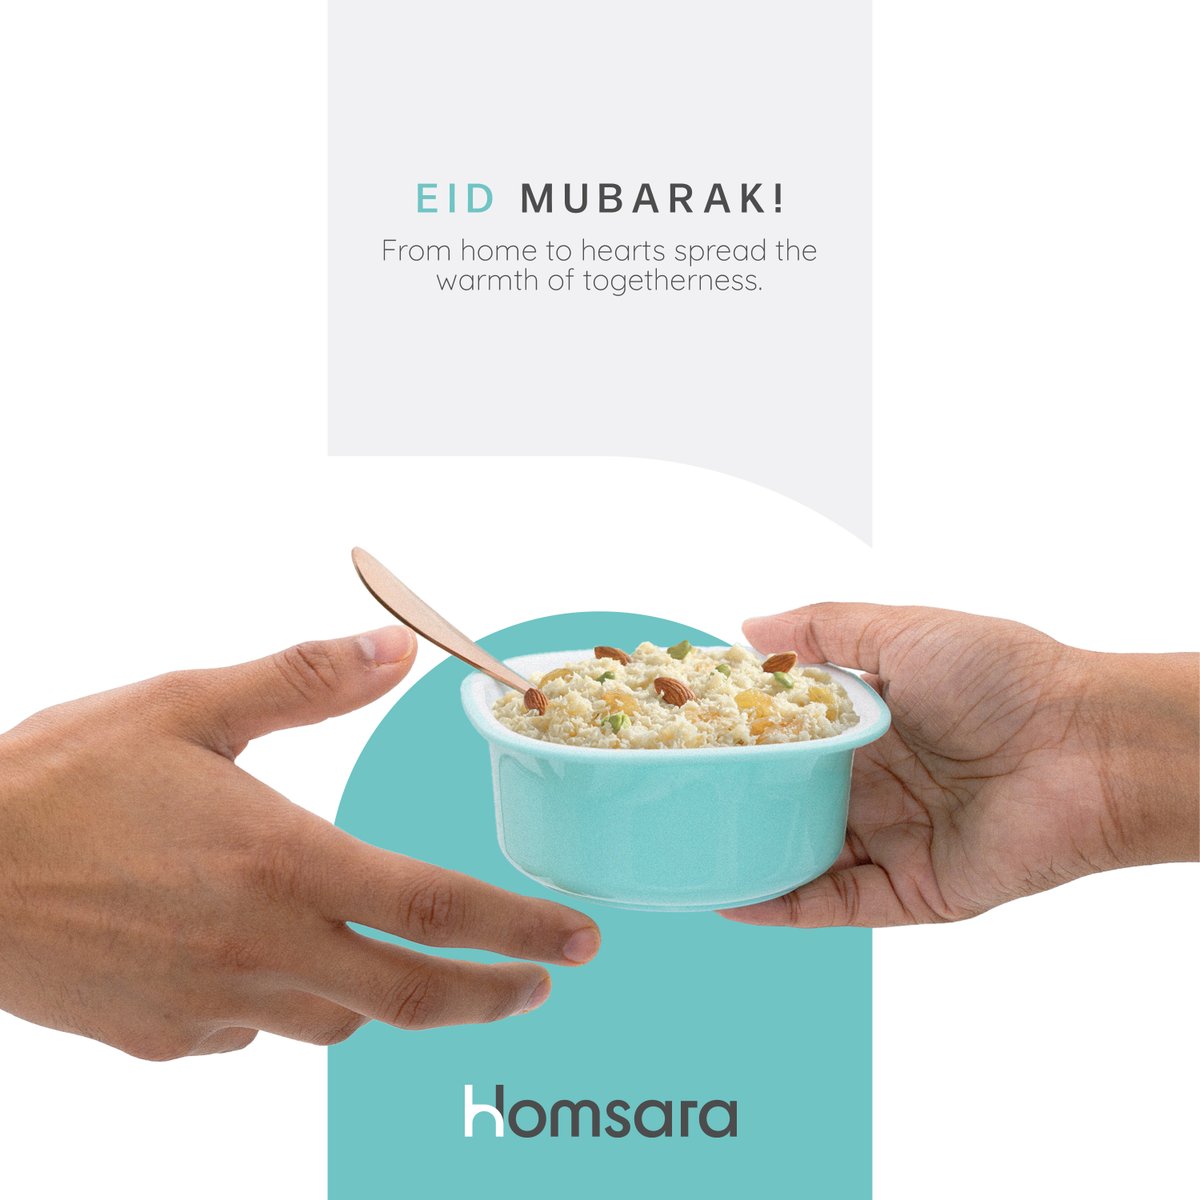 Share the joy of festivities with delicious meals and cherished moments
.
.
#Homsara #Homeware #EidMubarak #Eid #Kitchenware #FoodStorage #StorageBox #diy